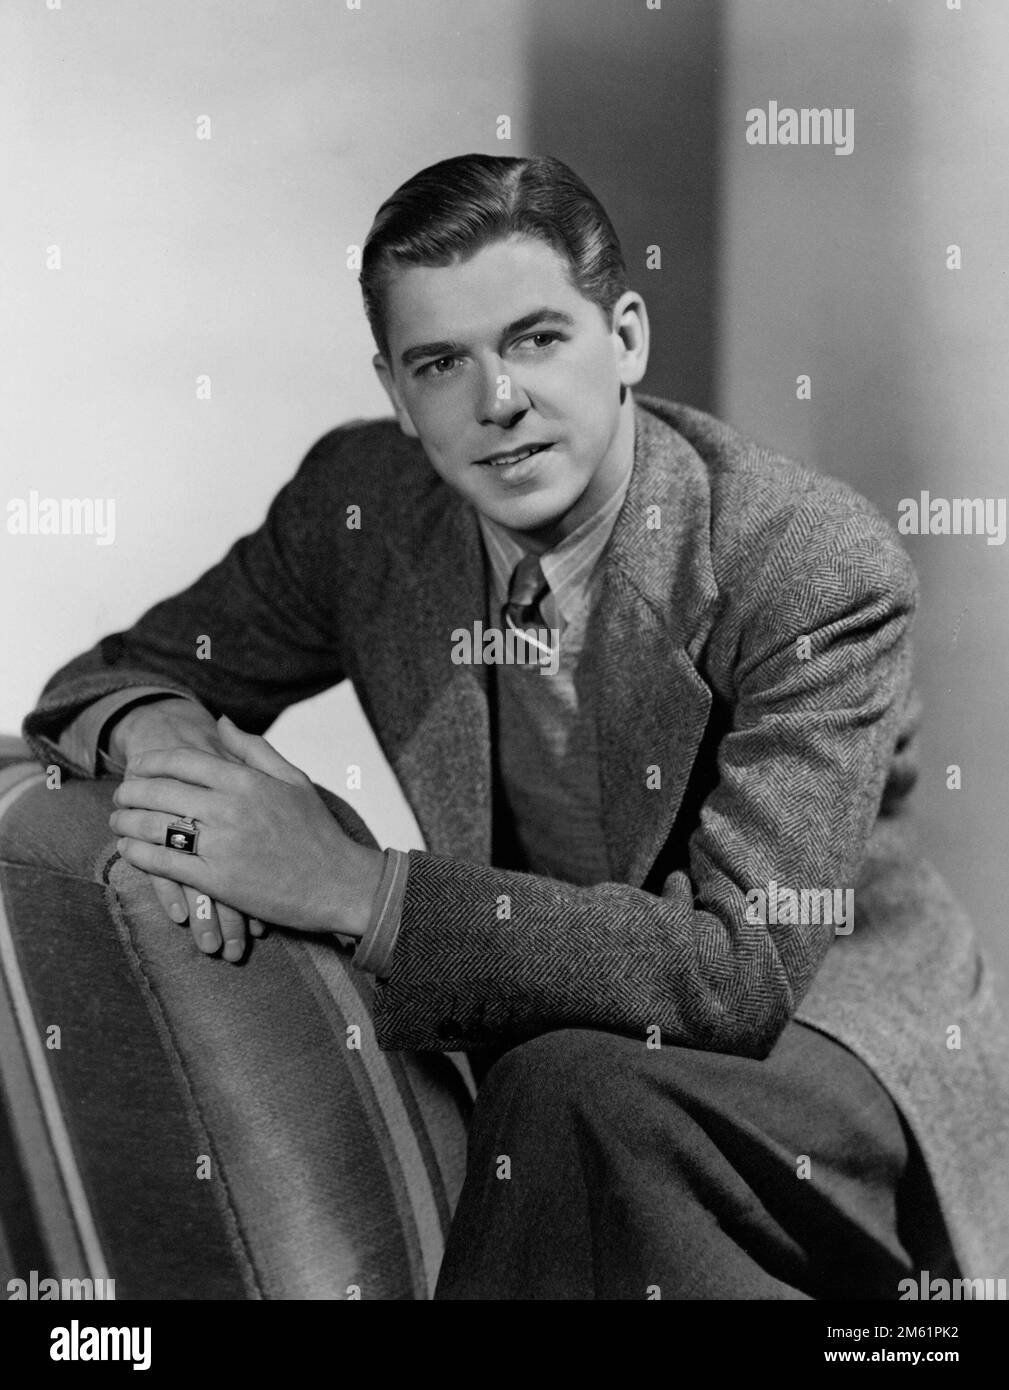 Ronald Reagan c 1940 (The actor years) Stock Photo